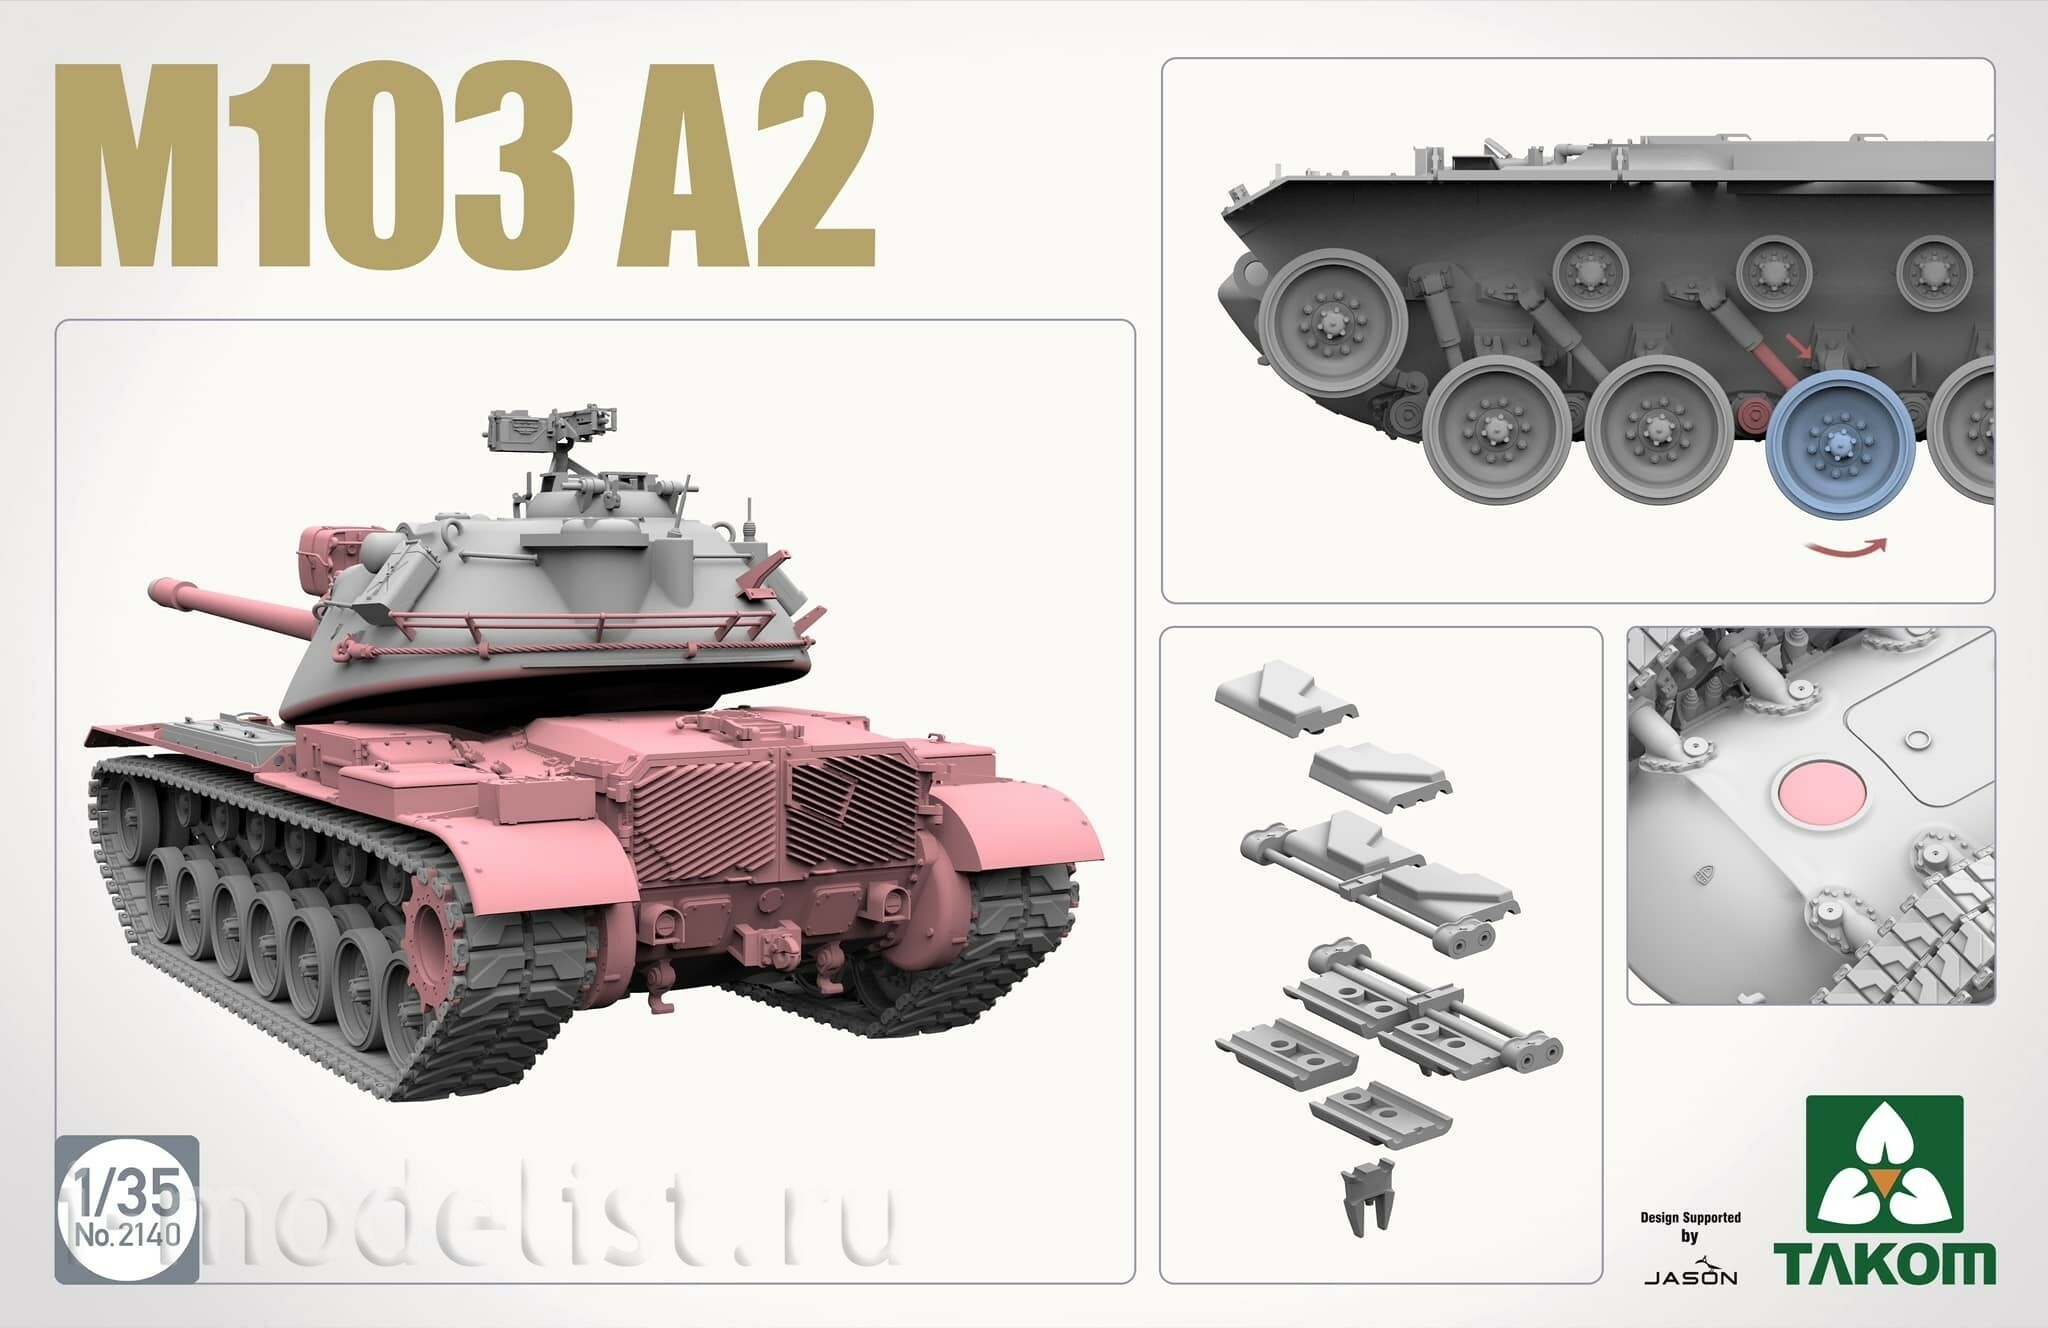 2140 Takom 1/35 Американский тяжёлый танк M103A2